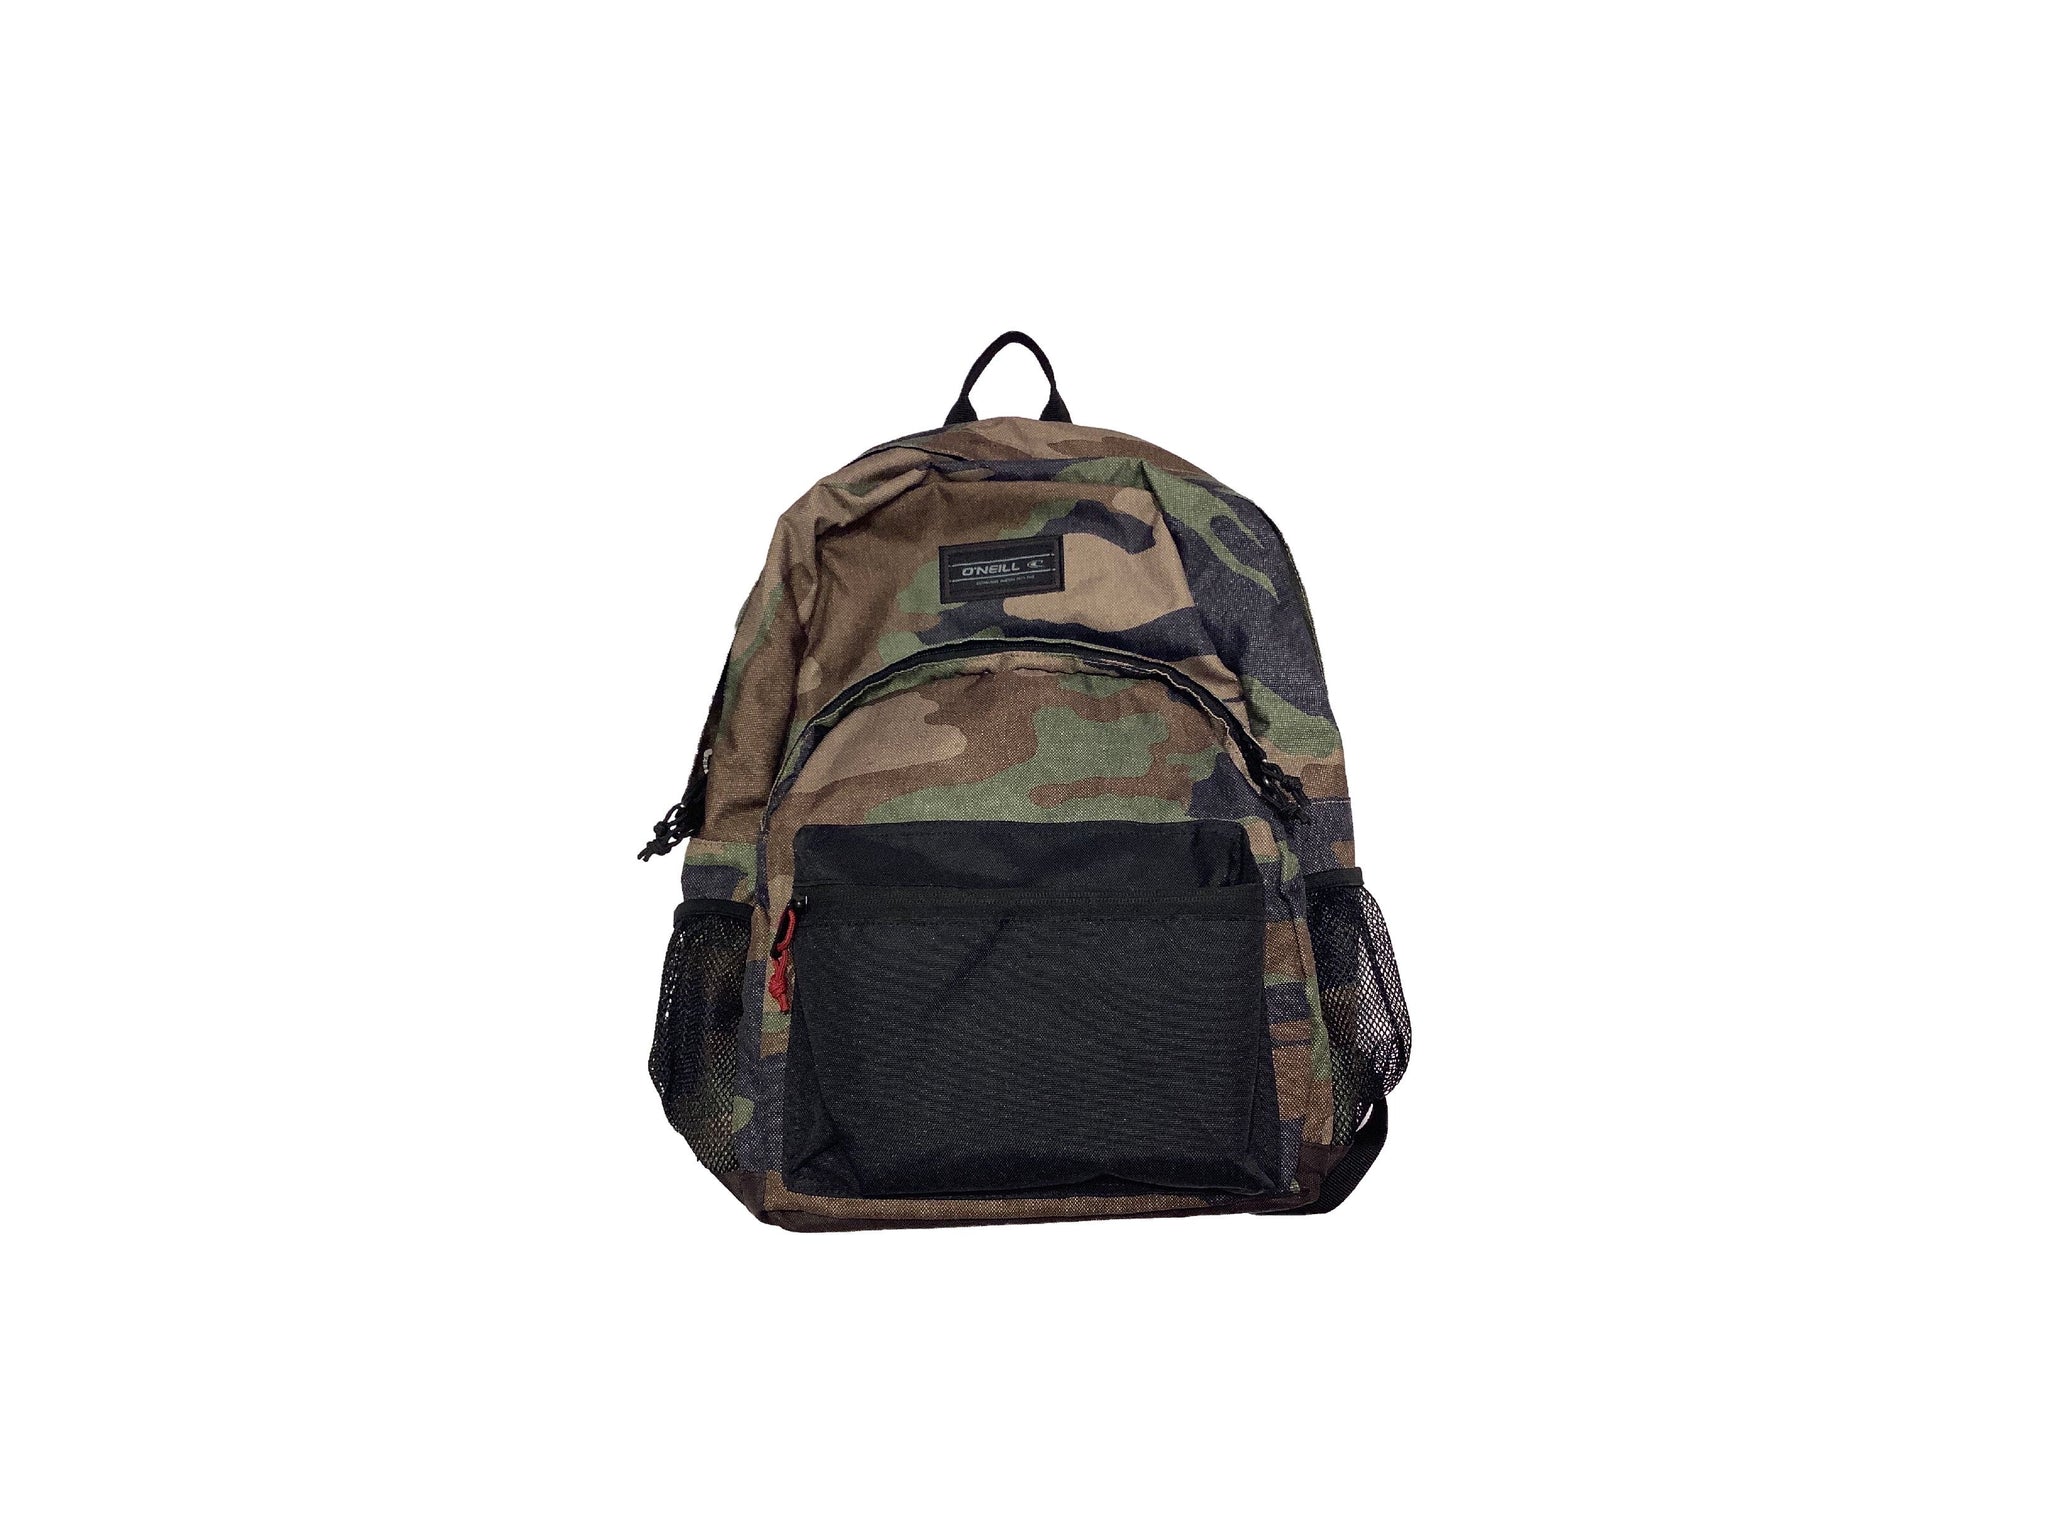 trio backpack bag